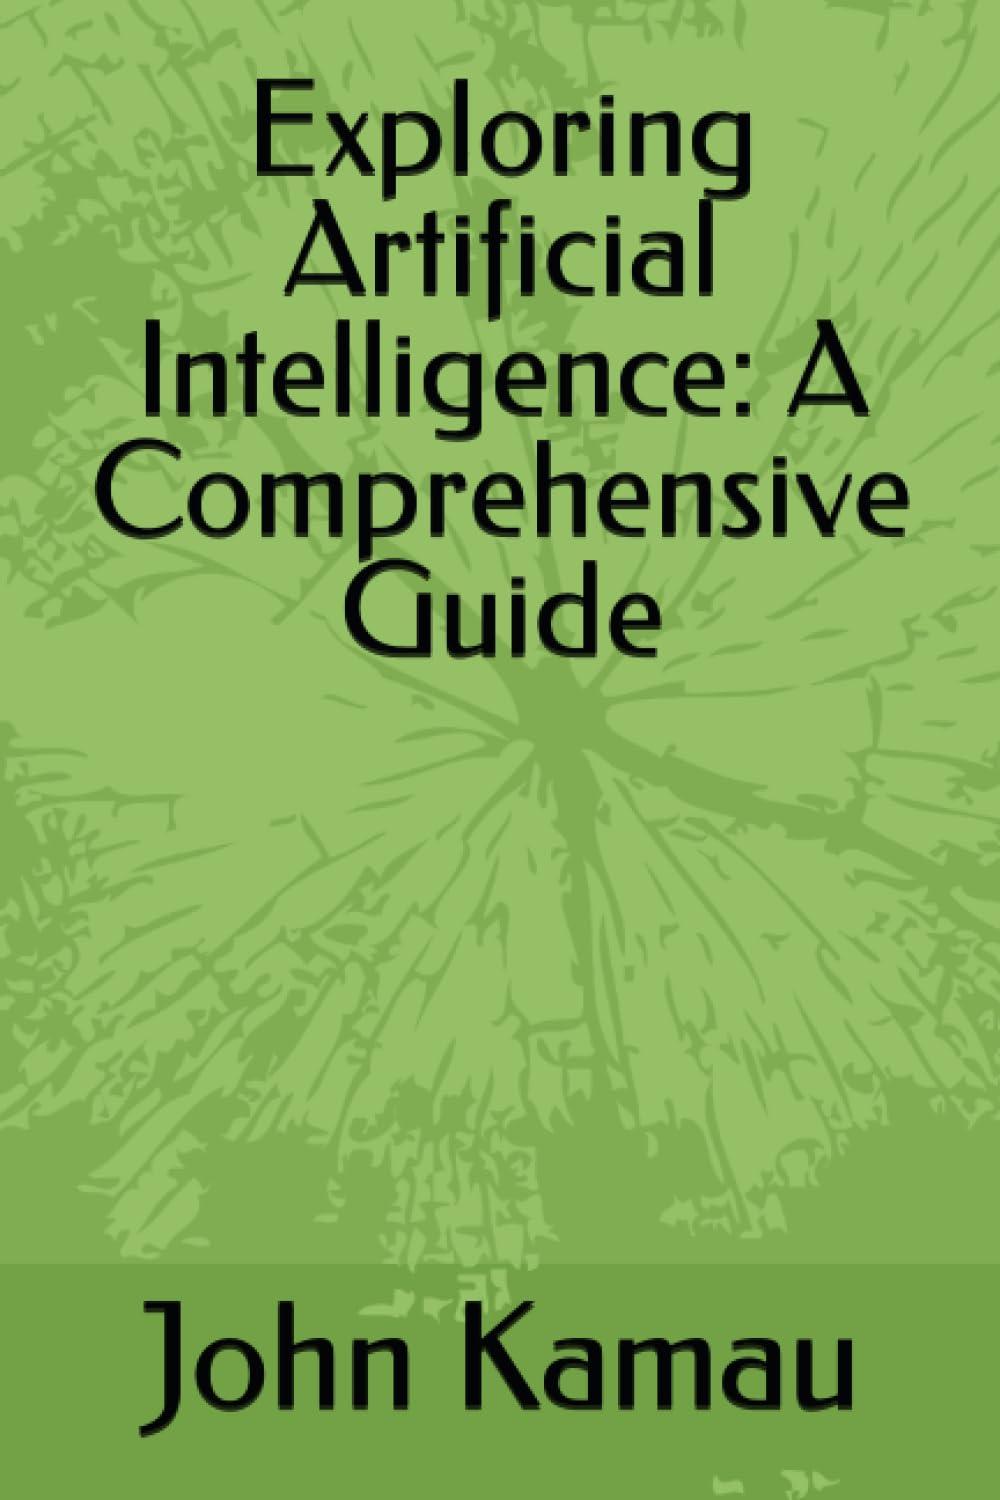 exploring artificial intelligence a comprehensive guide 1st edition john kamau b0c91xd5yh, 979-8399811192